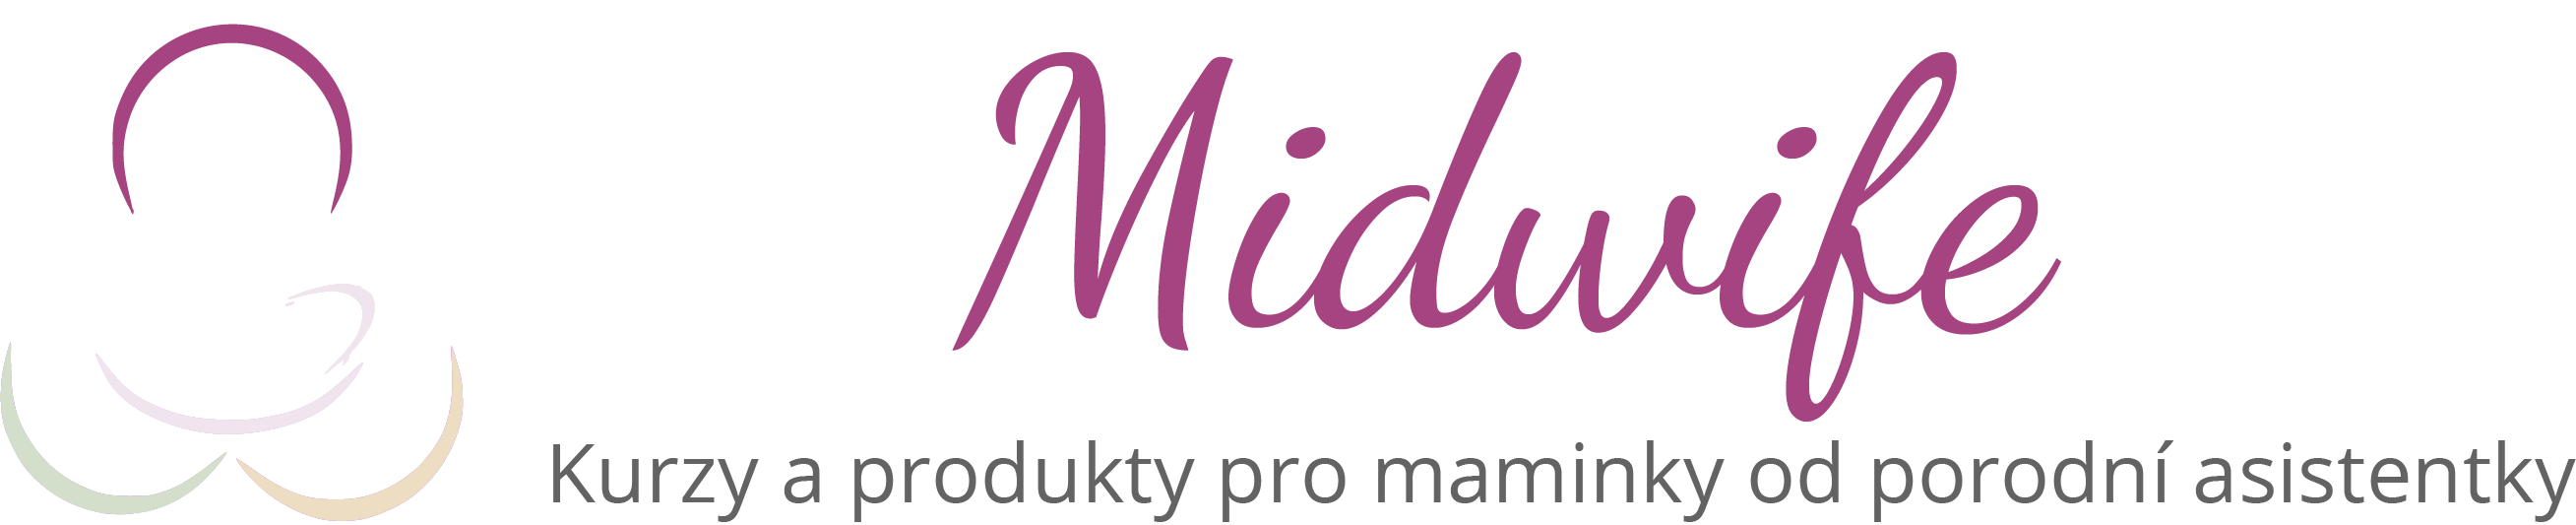 online.midwife.cz